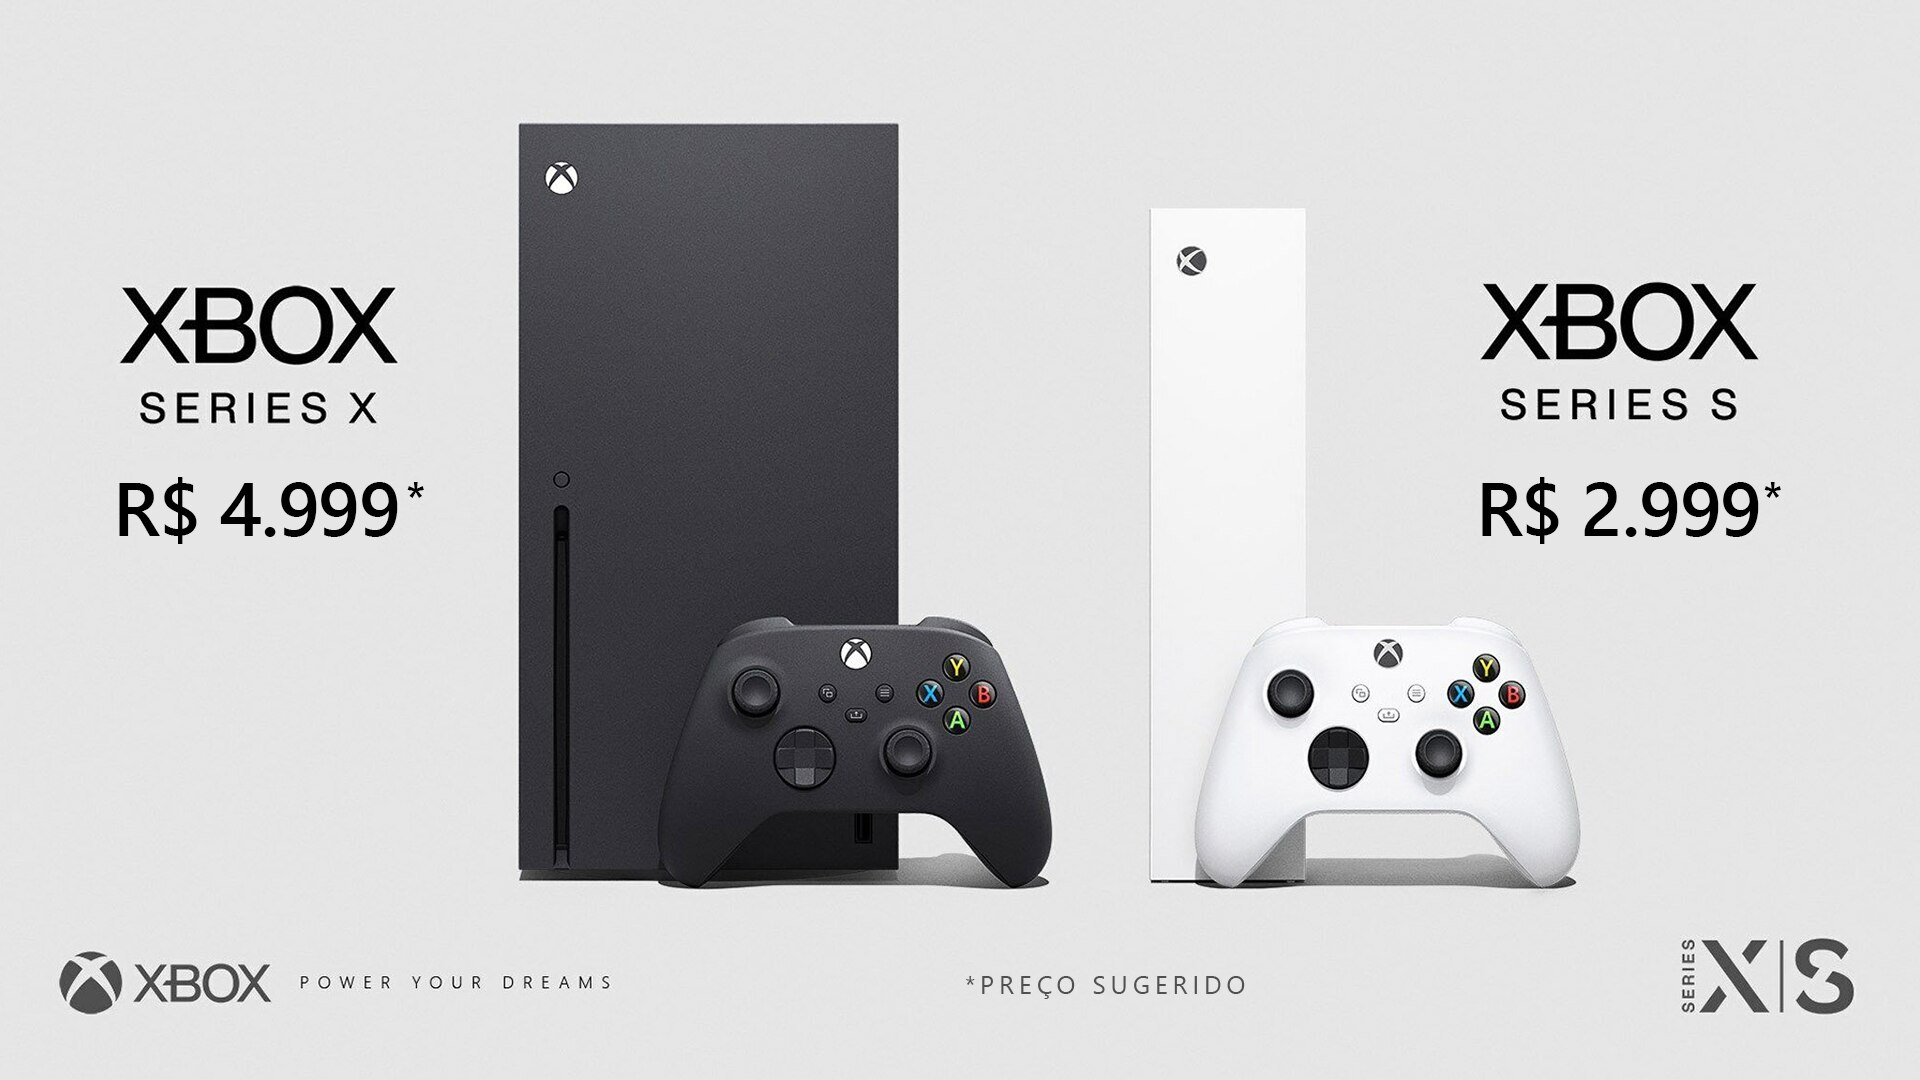 Microsoft investirá pelo menos US$ 1 bilhão em novo Xbox One